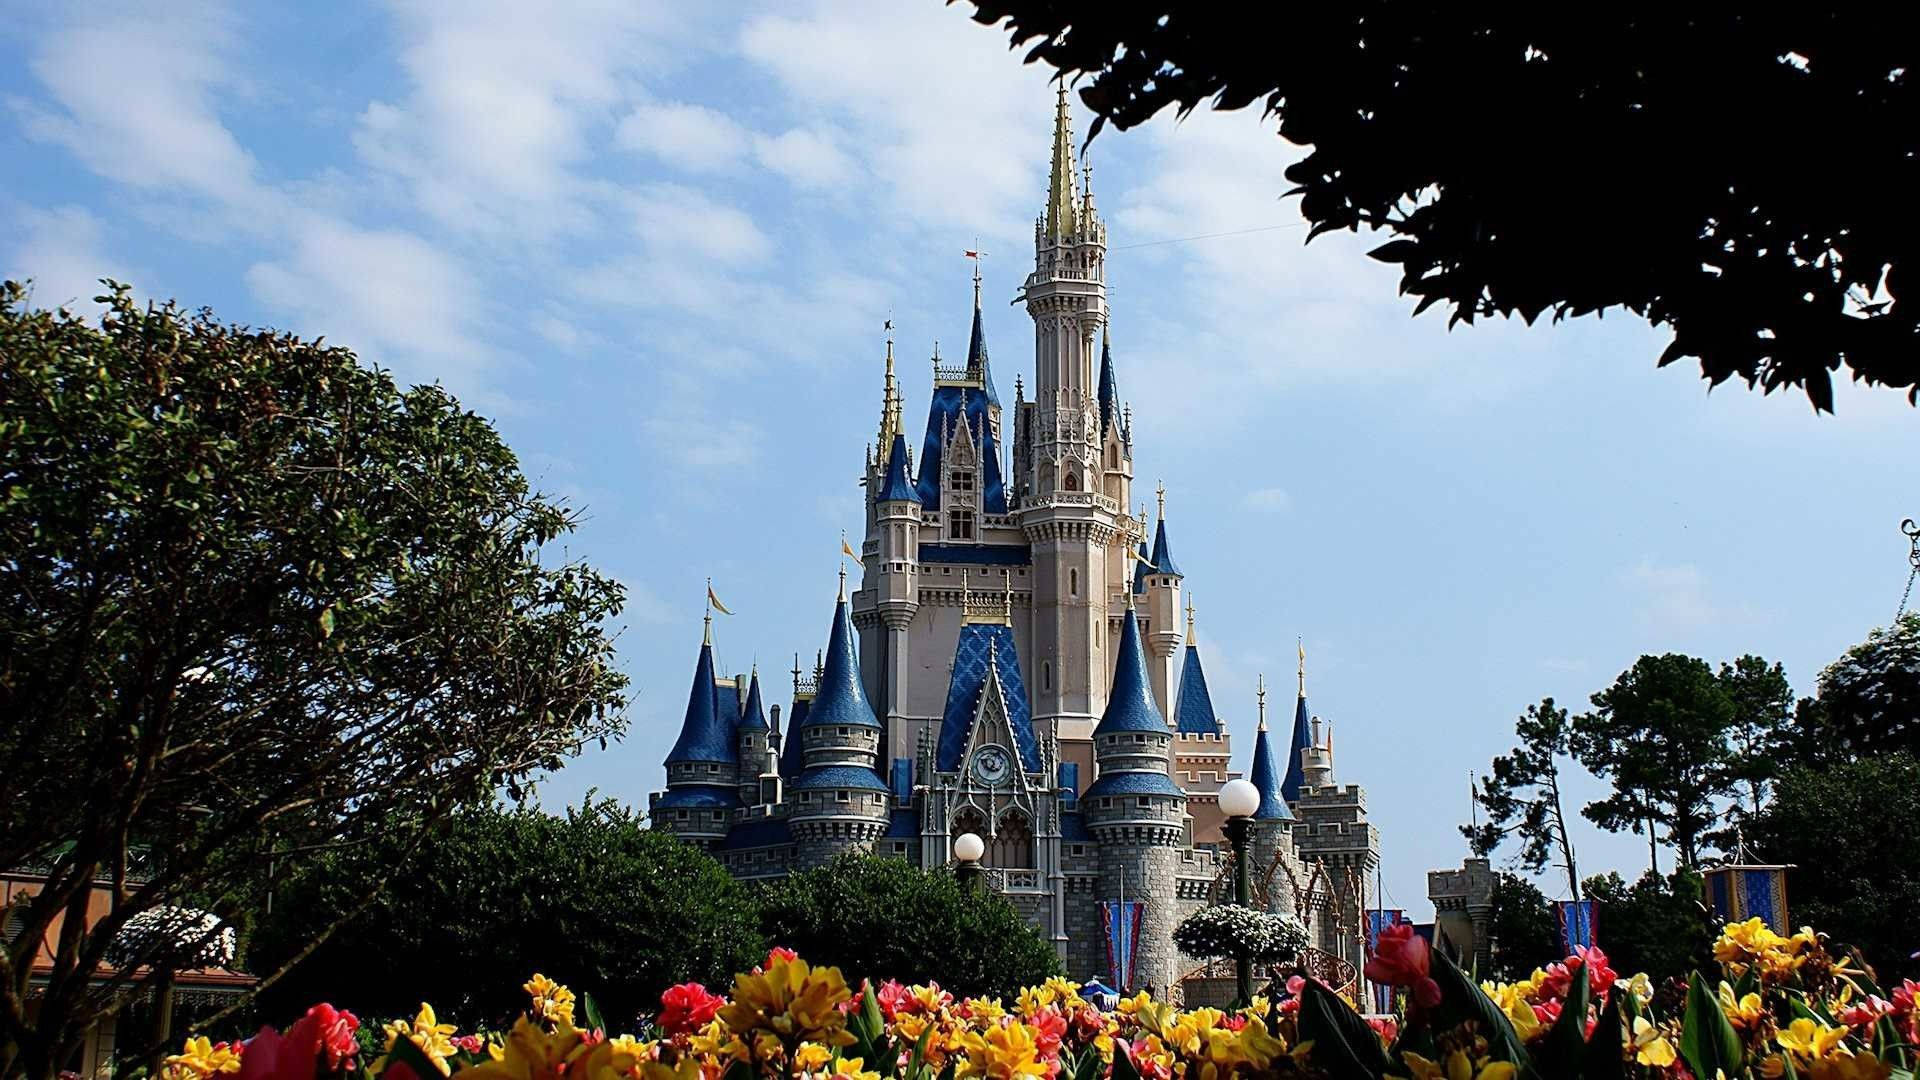 Disney World With Flowers